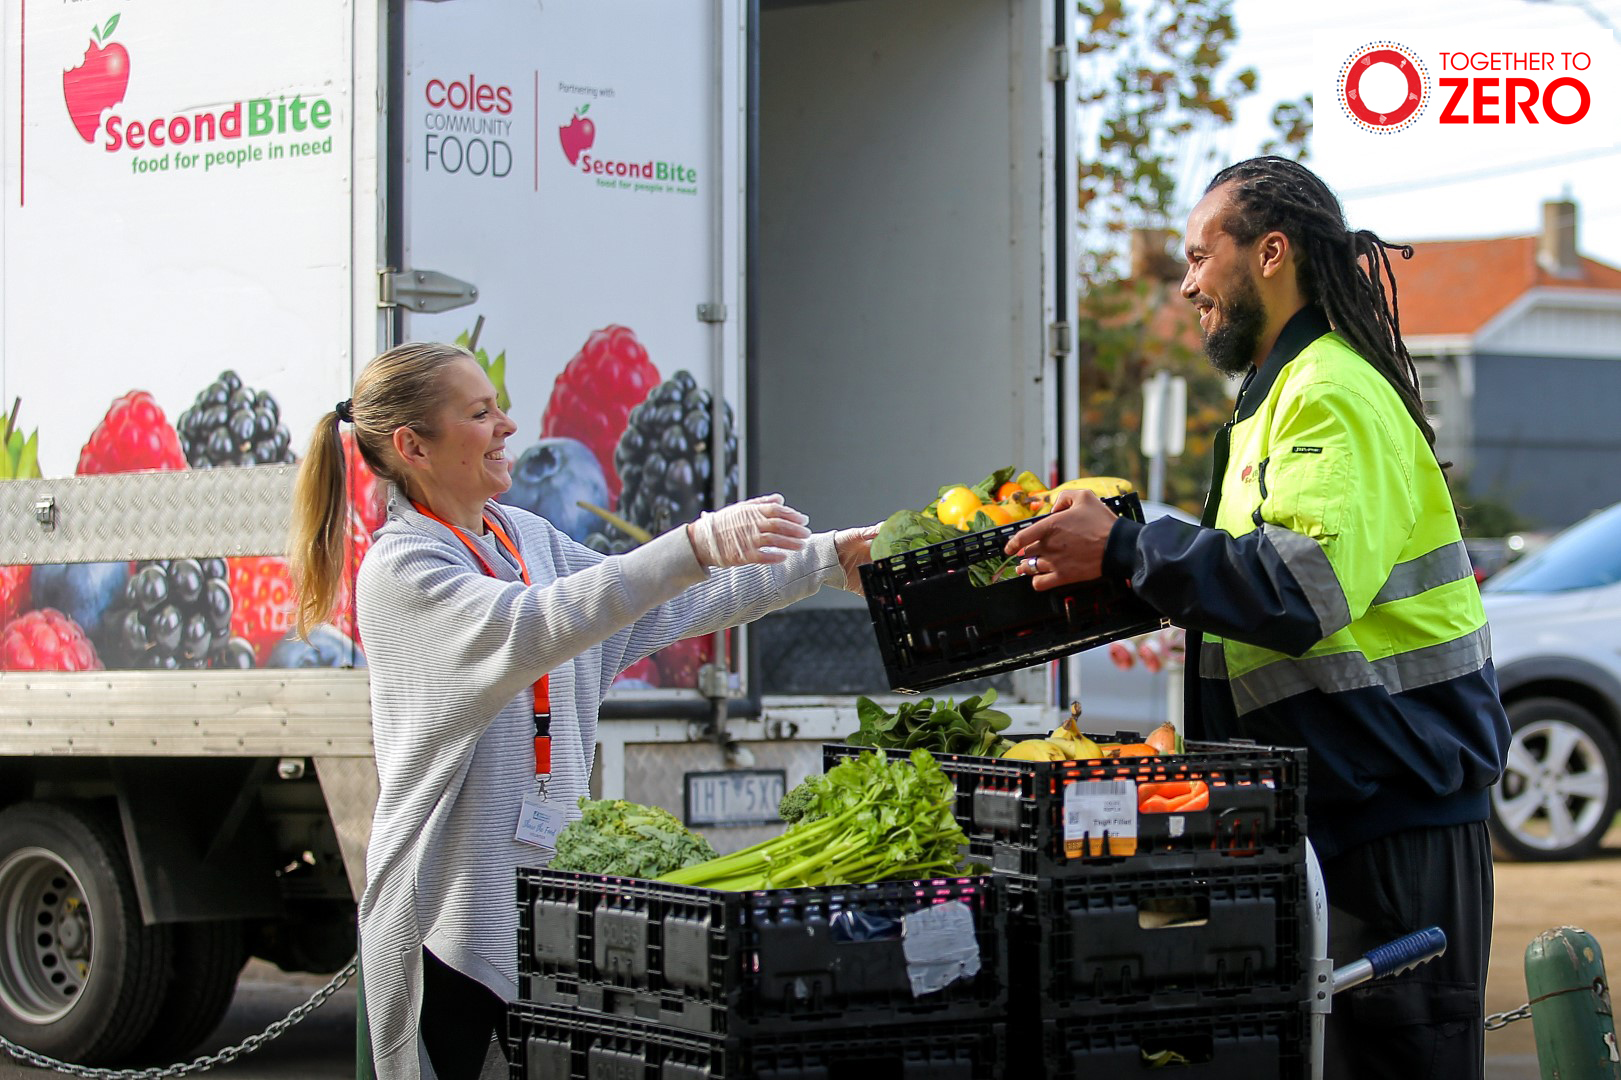 Coles fresh produce donation to SecondBite